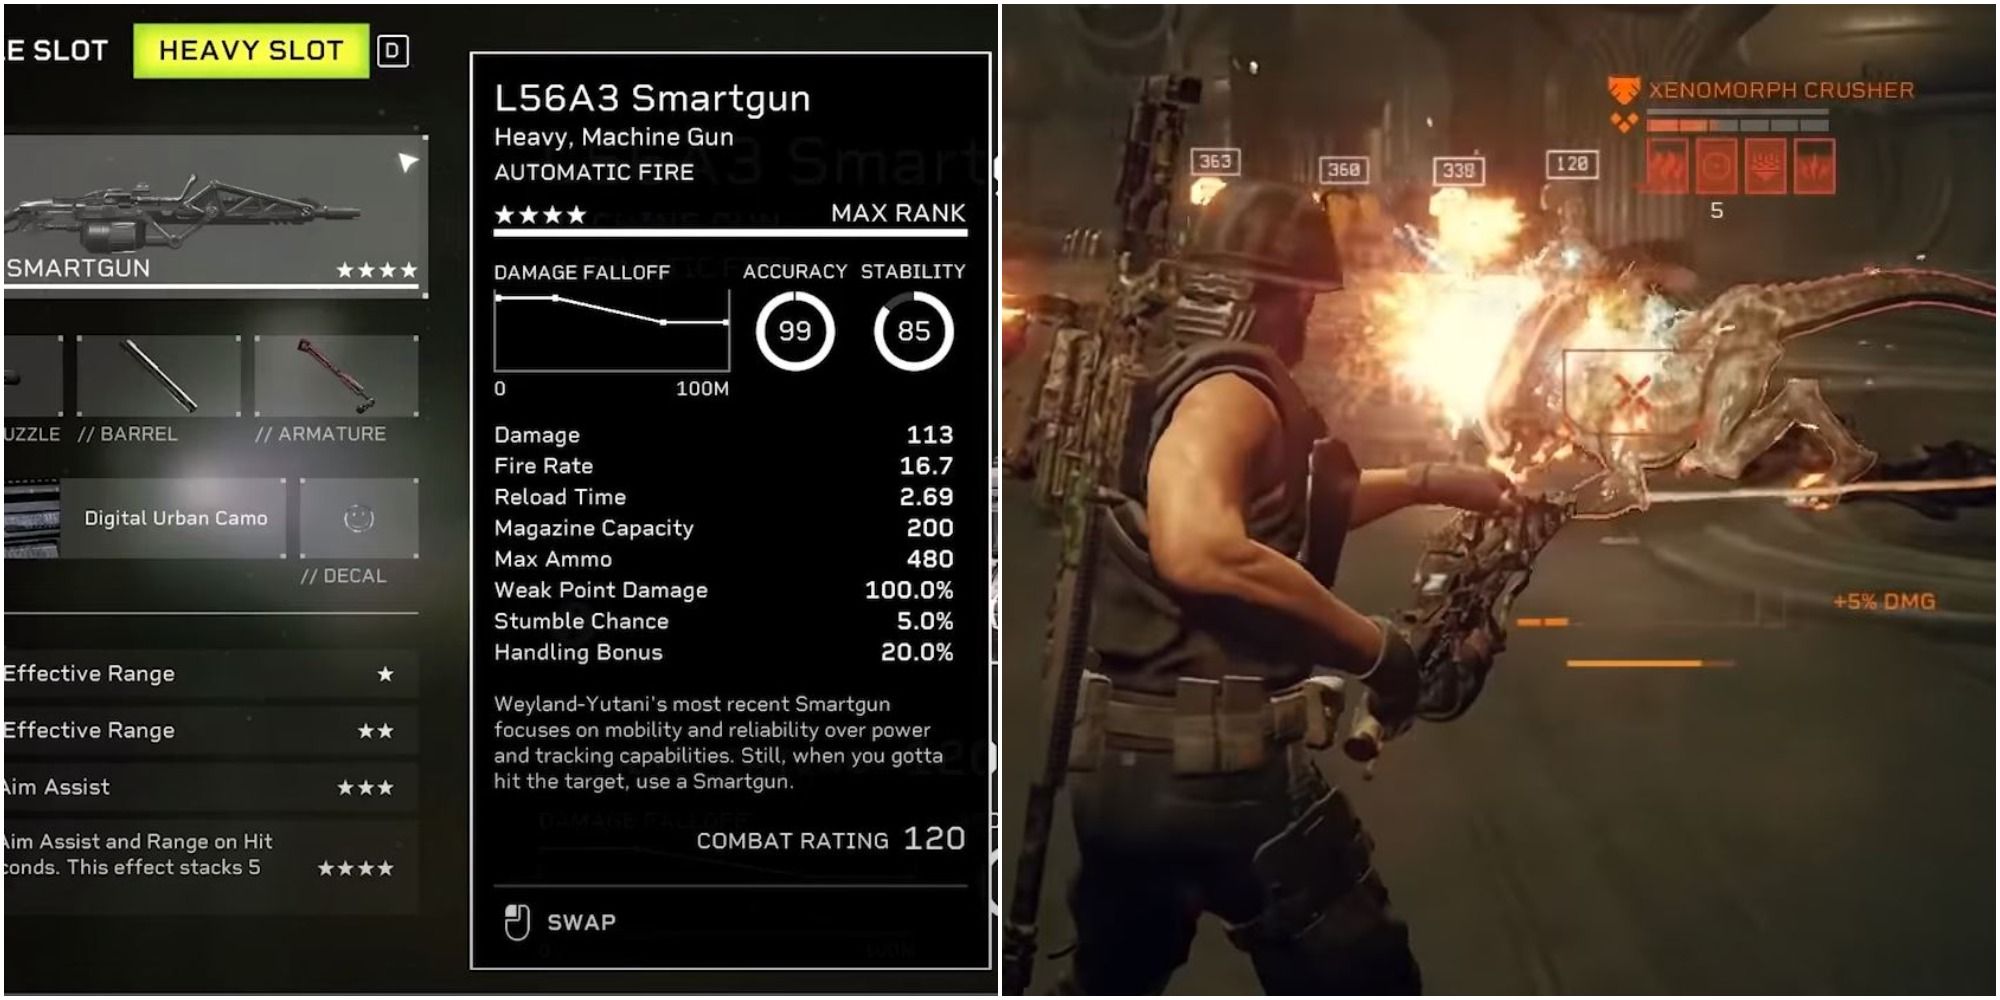 Side-by-side of Smartgun description and the Smartgun in action in Aliens: Fireteam Elite